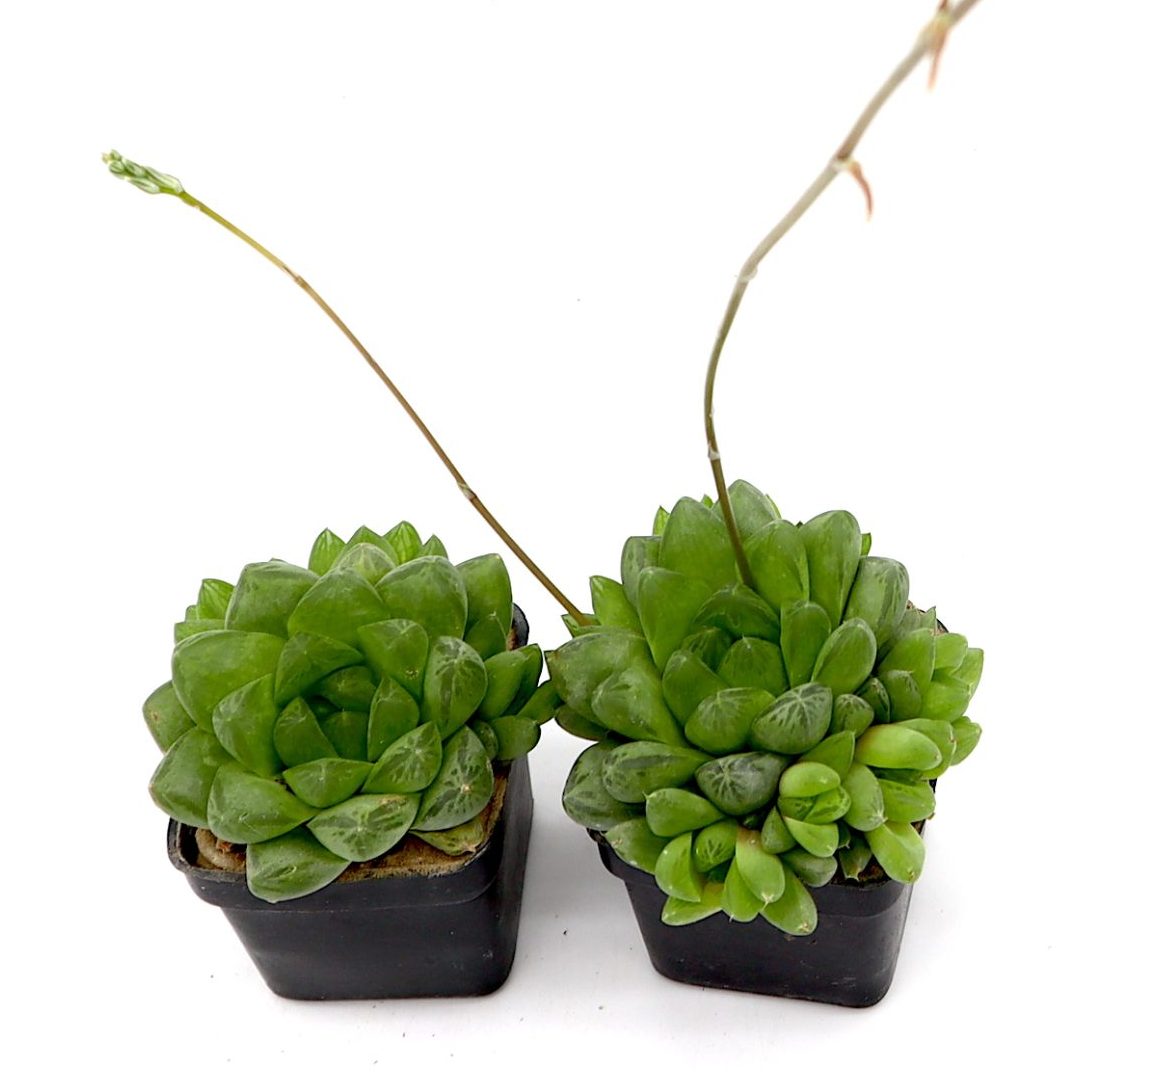 Haworthia Cooperi “Window Haworthia” 4-6cm (Mini succulents)